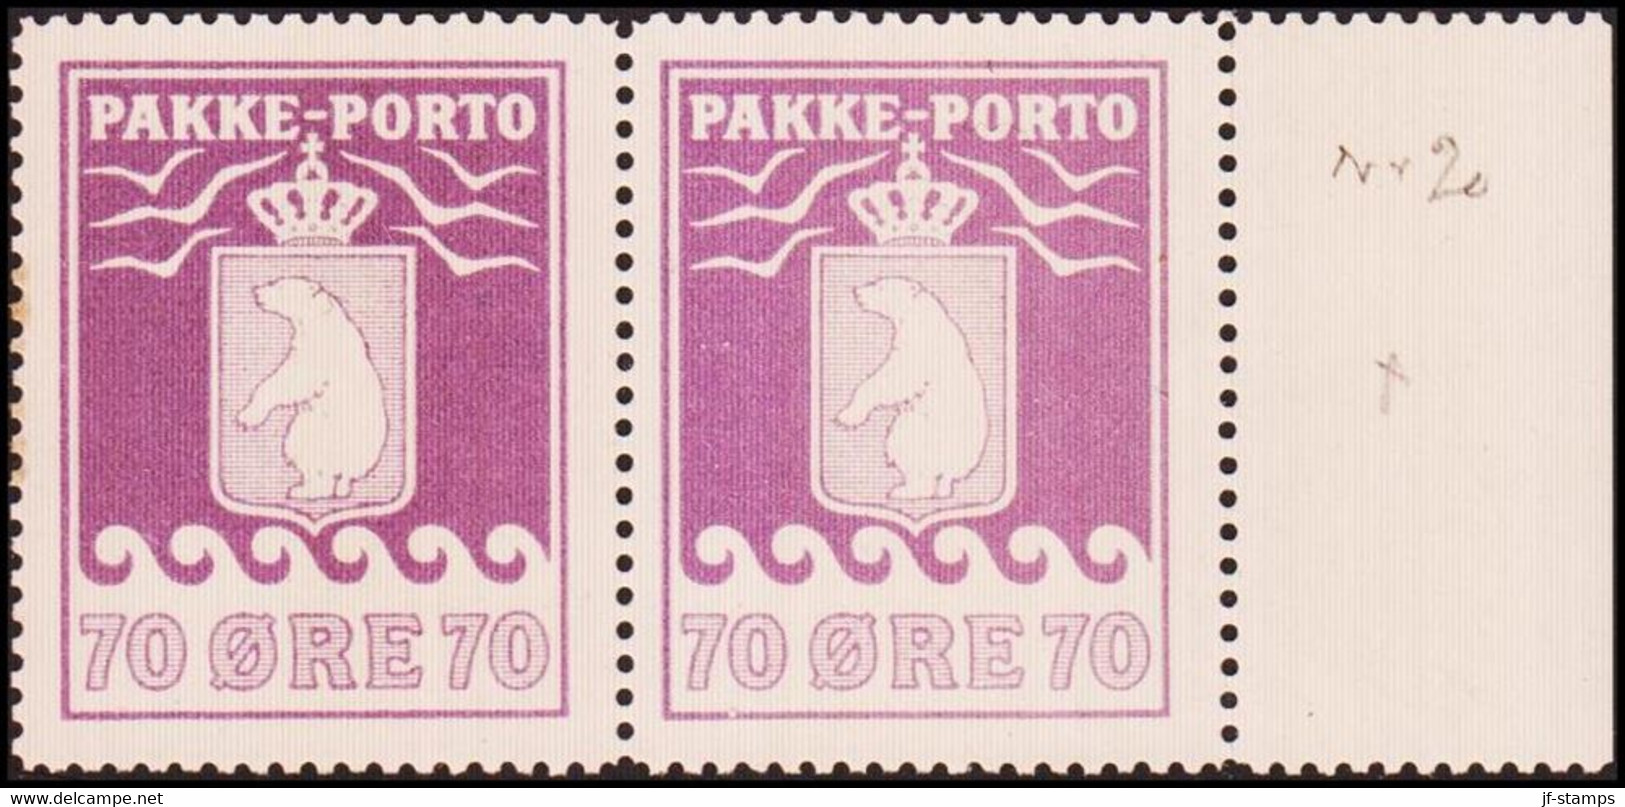 1937. PAKKE PORTO. 70 øre Pale Violet. Andreasen & Lachmann Litho. Perf. 11. Never Hi... (Michel 13) - JF415146 - Parcel Post